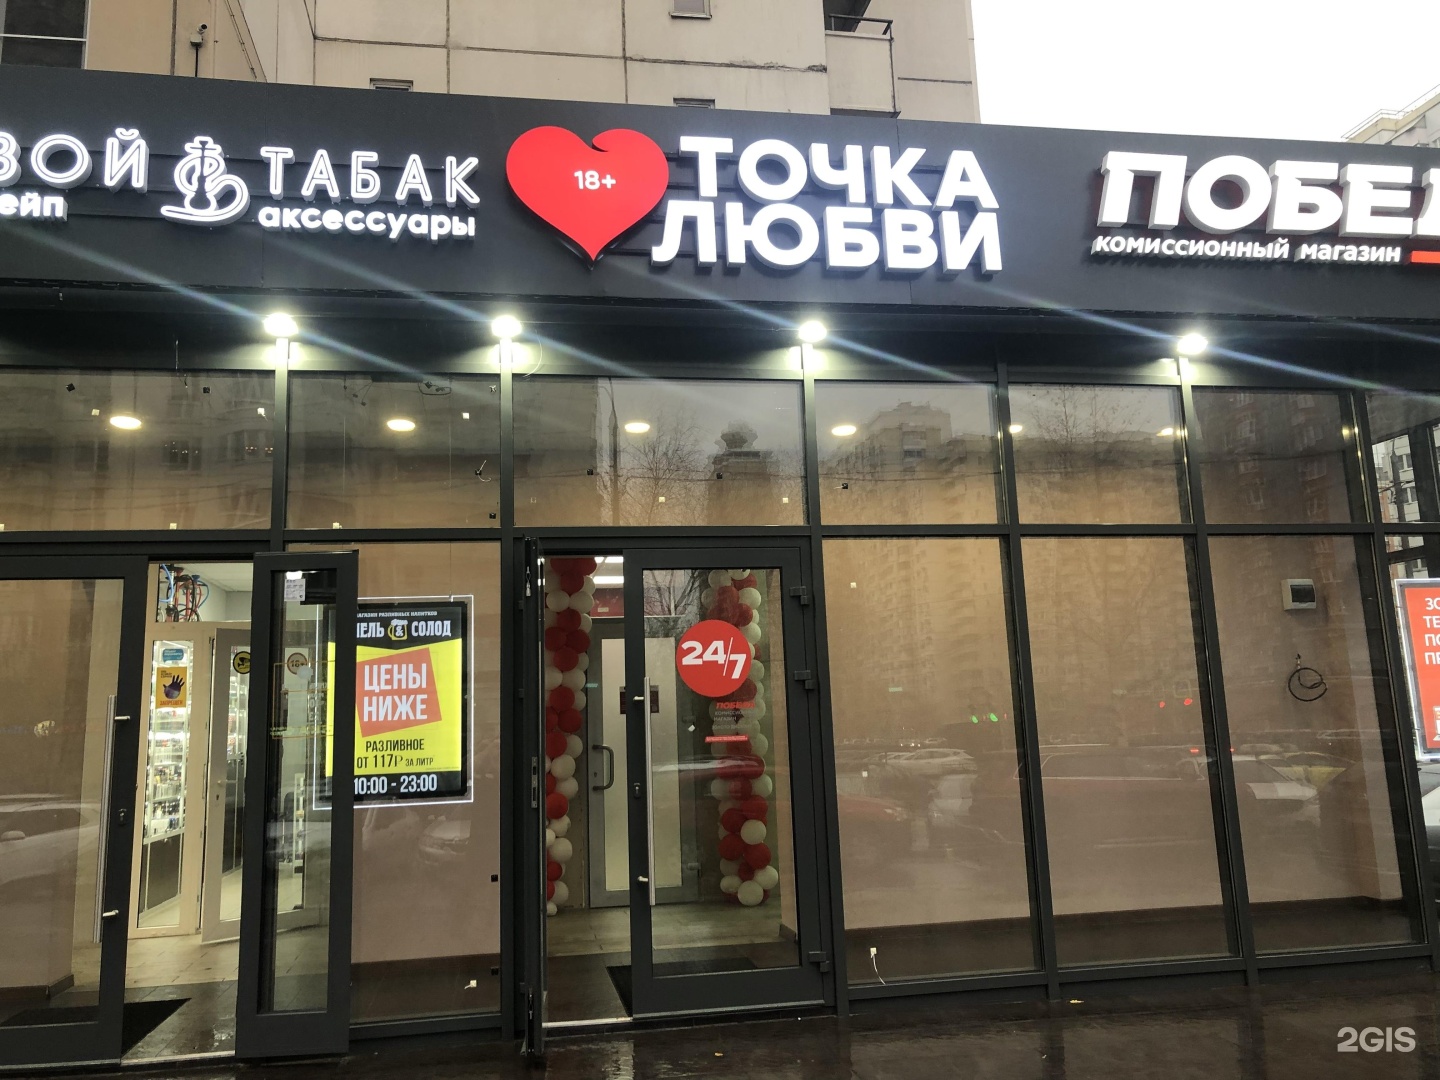 Big love shop. Магазин точка любви. Метро шоп. Точка любви Санкт-Петербург. Магазин для взрослых точка любви.